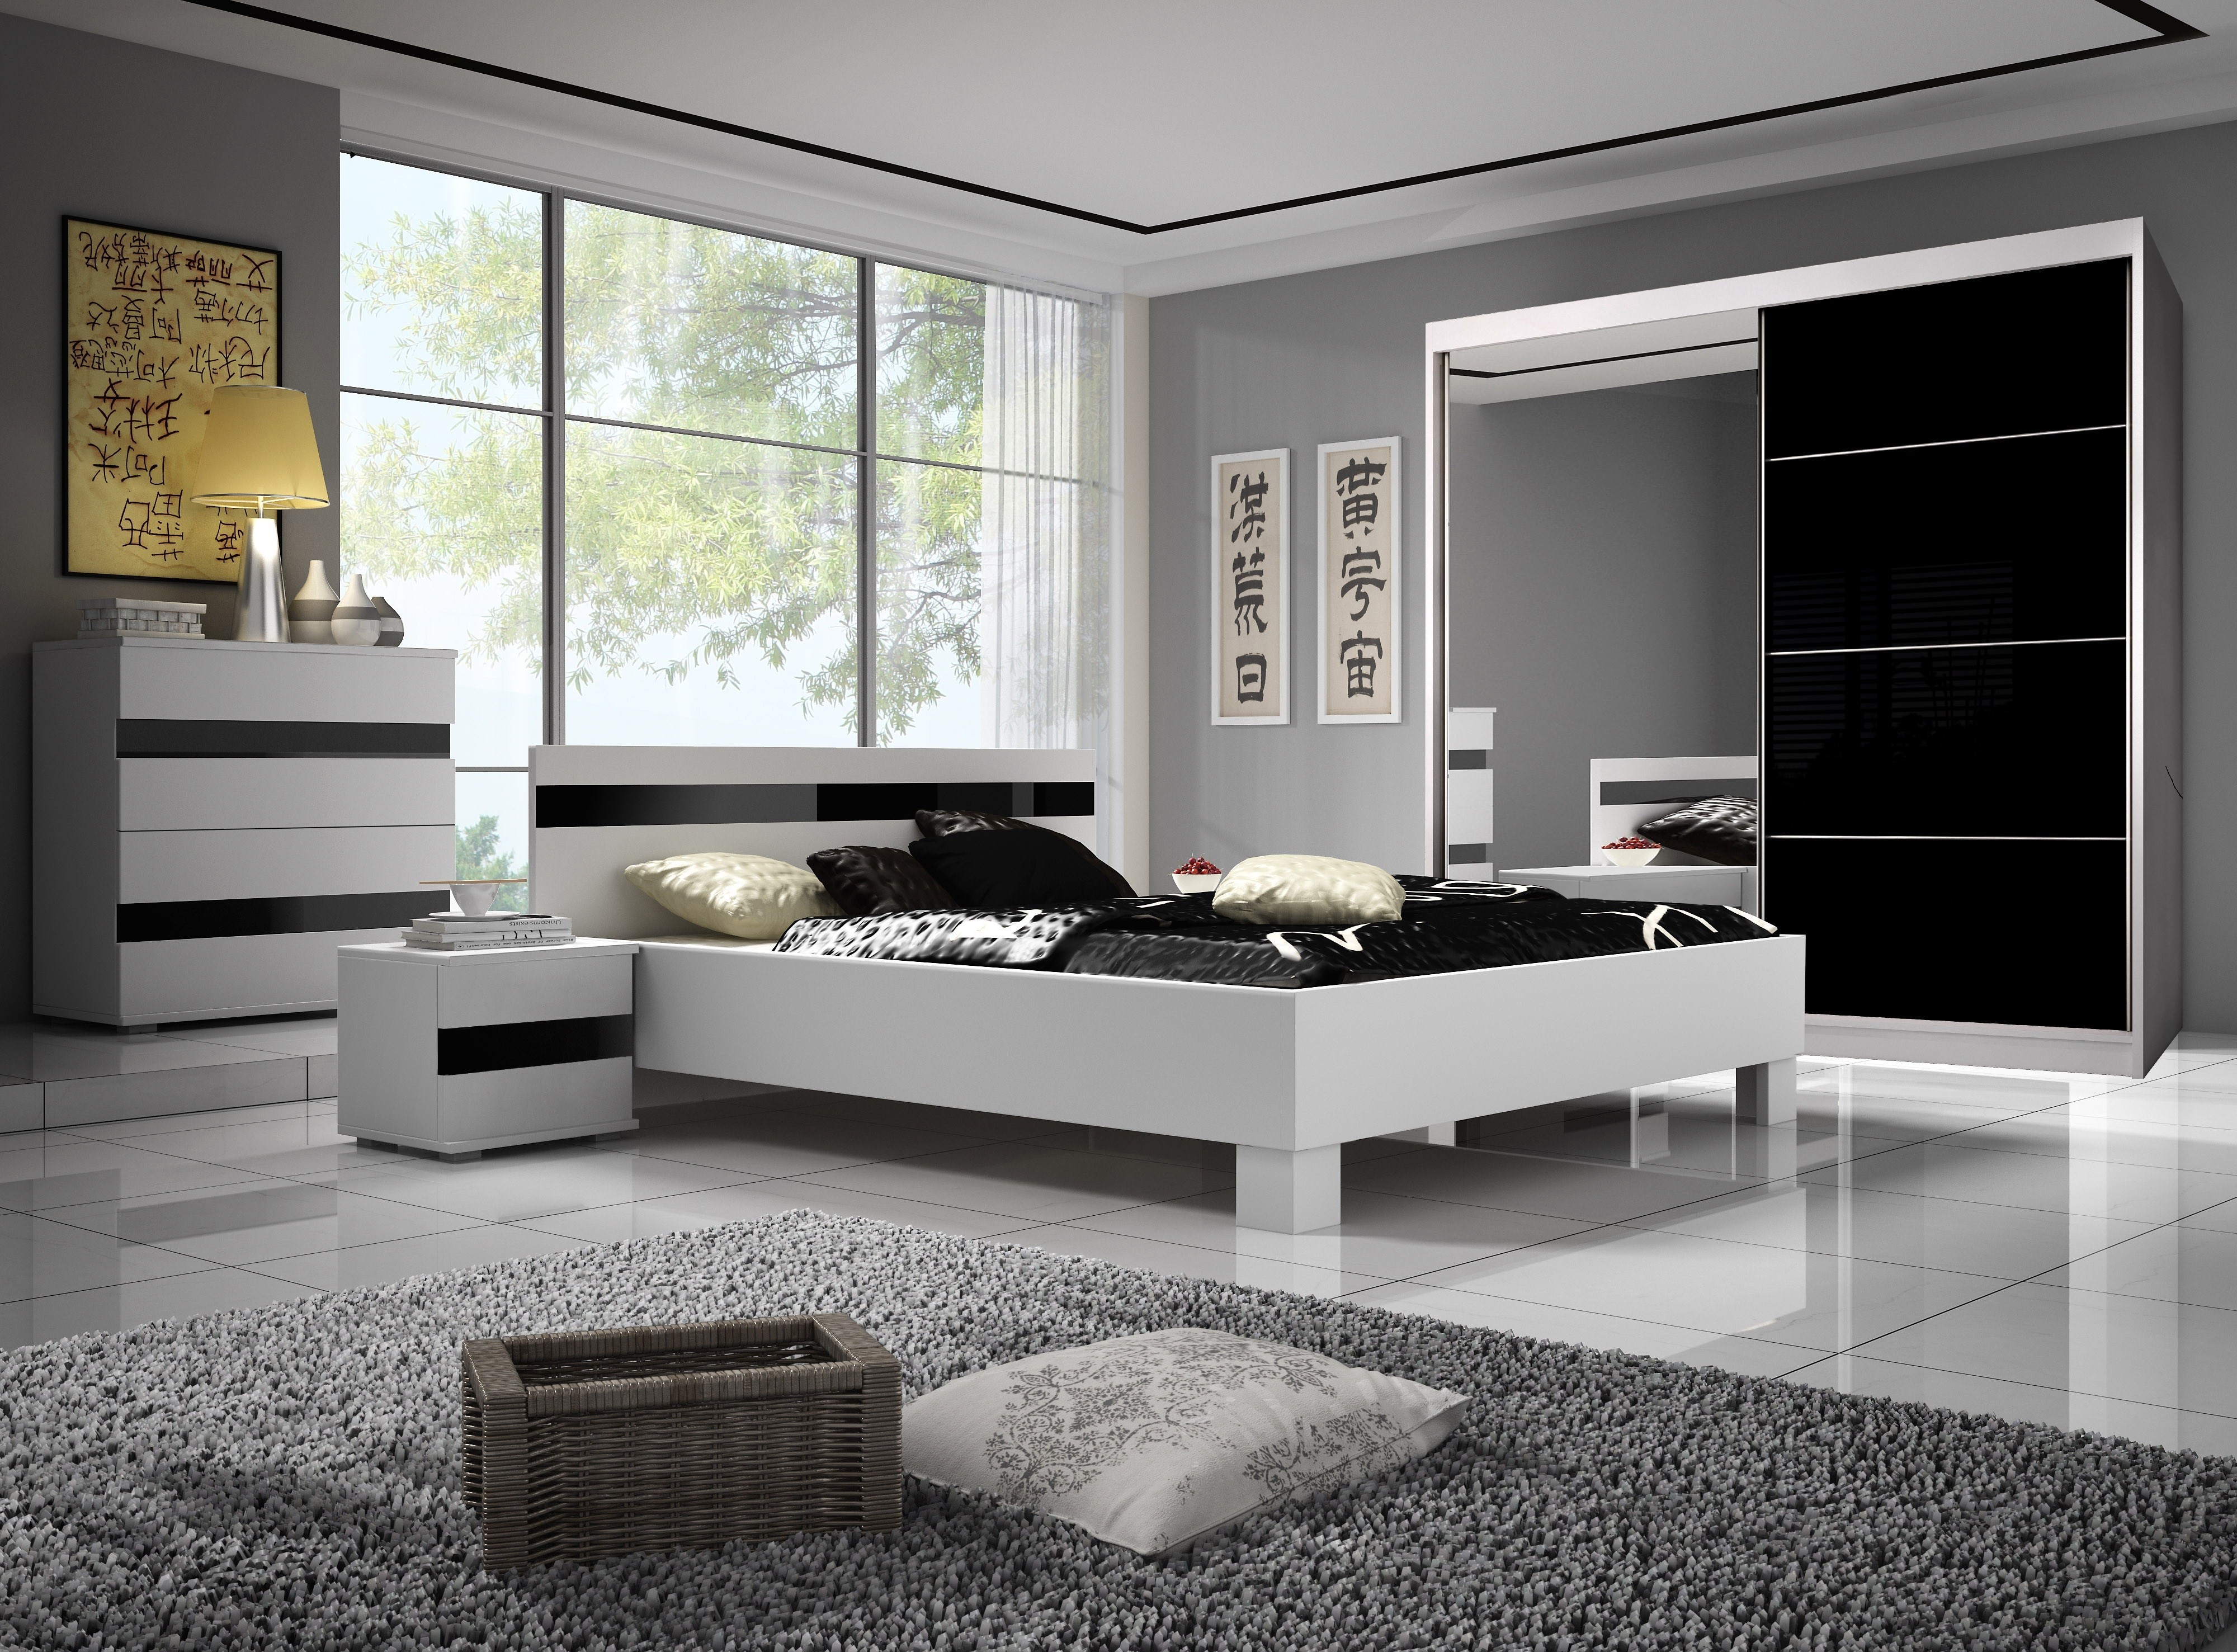 Dormitor lucca alb+negru